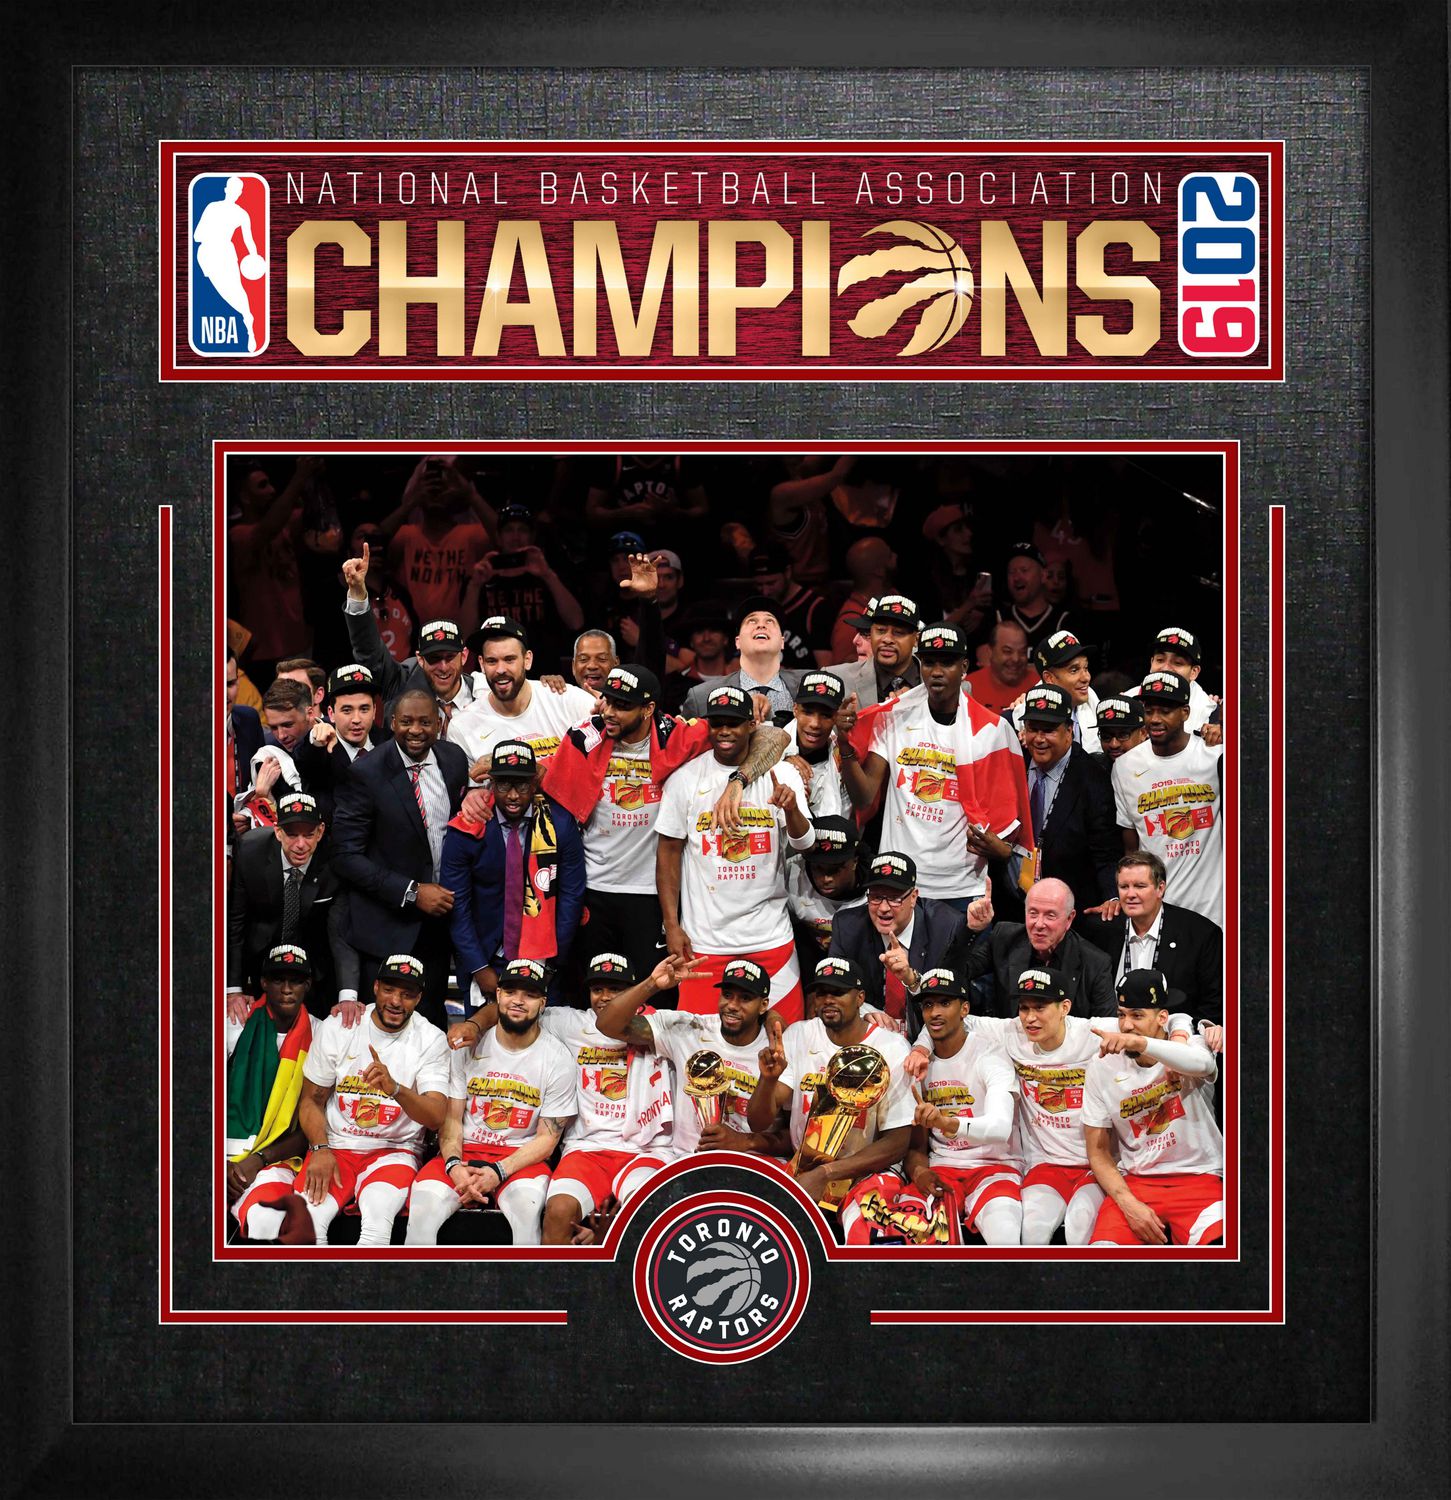 Best Buy: 2019 NBA Champions: Toronto Raptors [Blu-ray/DVD] [2019]